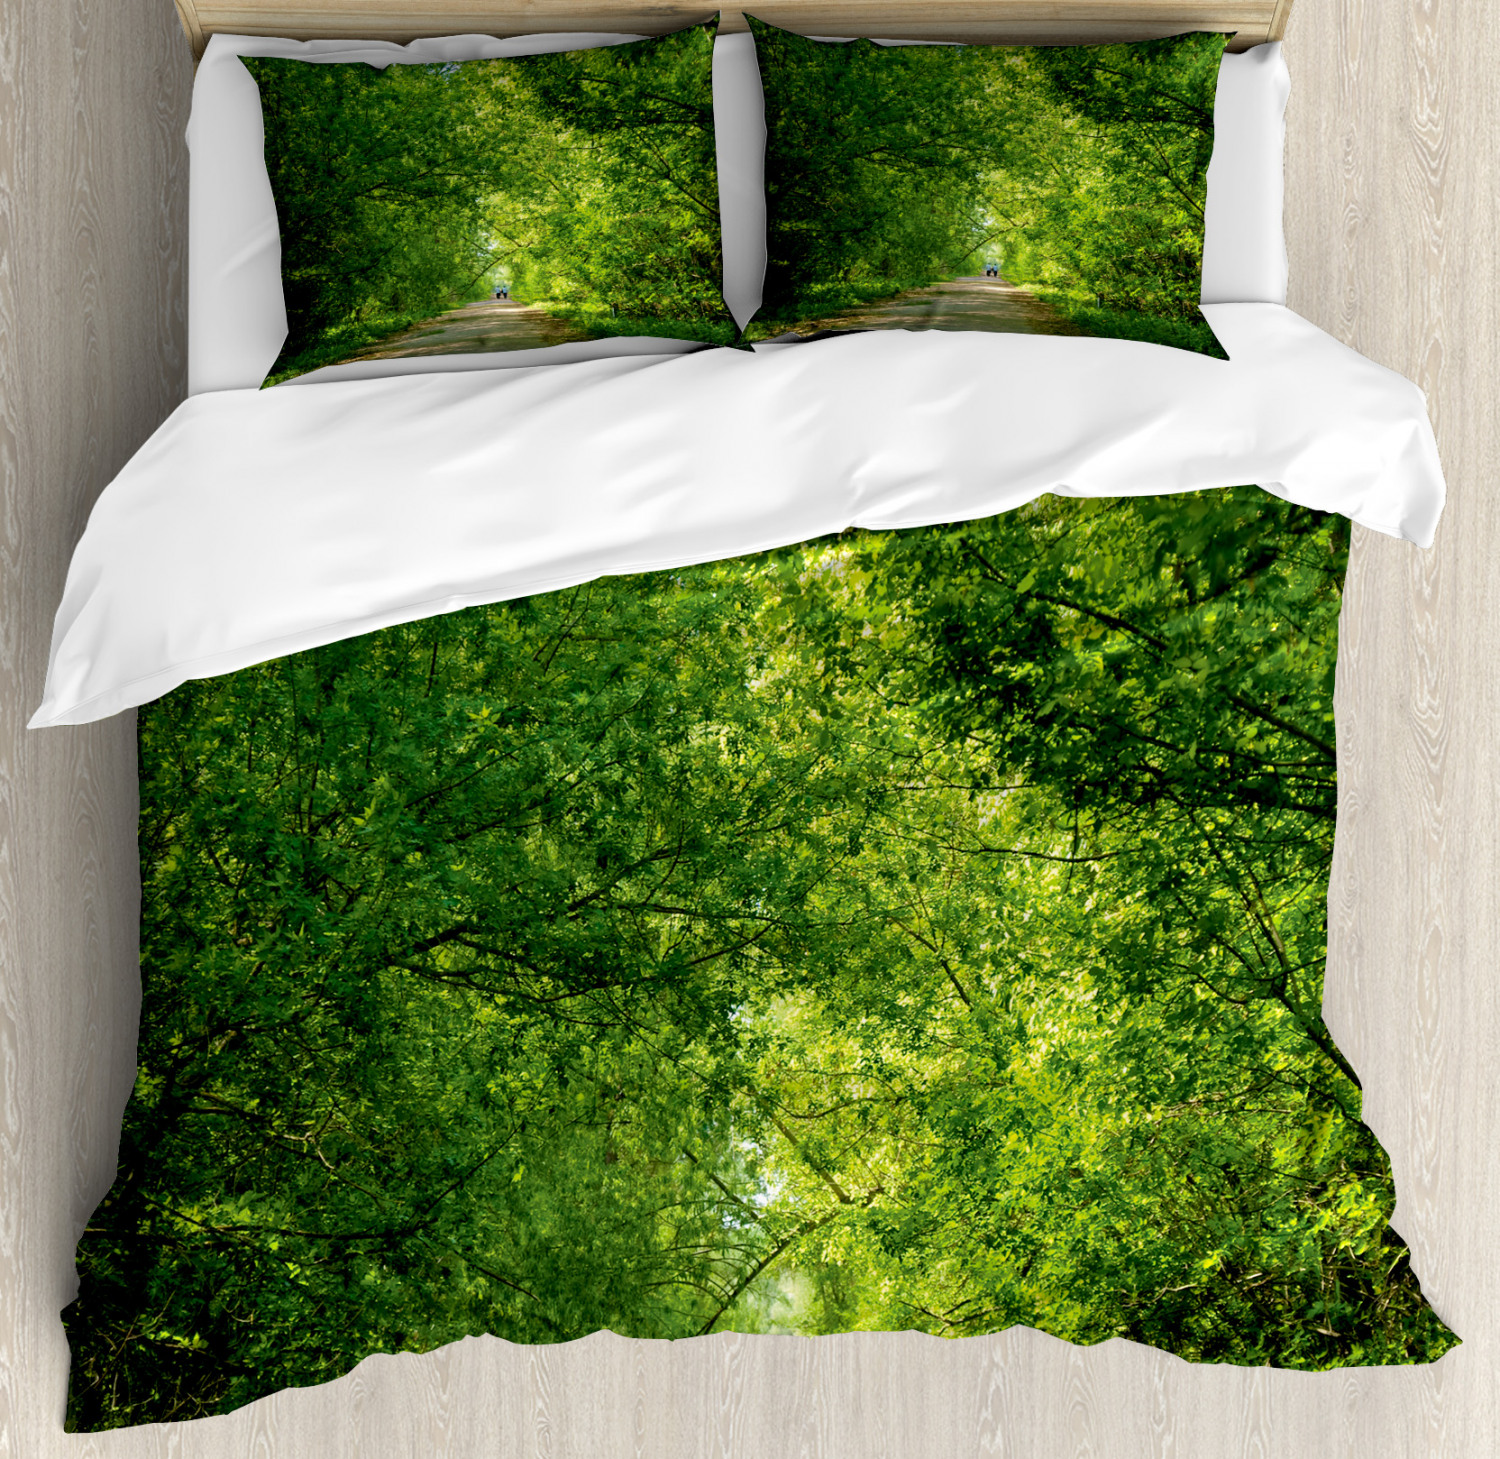 Landscape Duvet Cover Set with Pillow Shams Fresh Canopy For